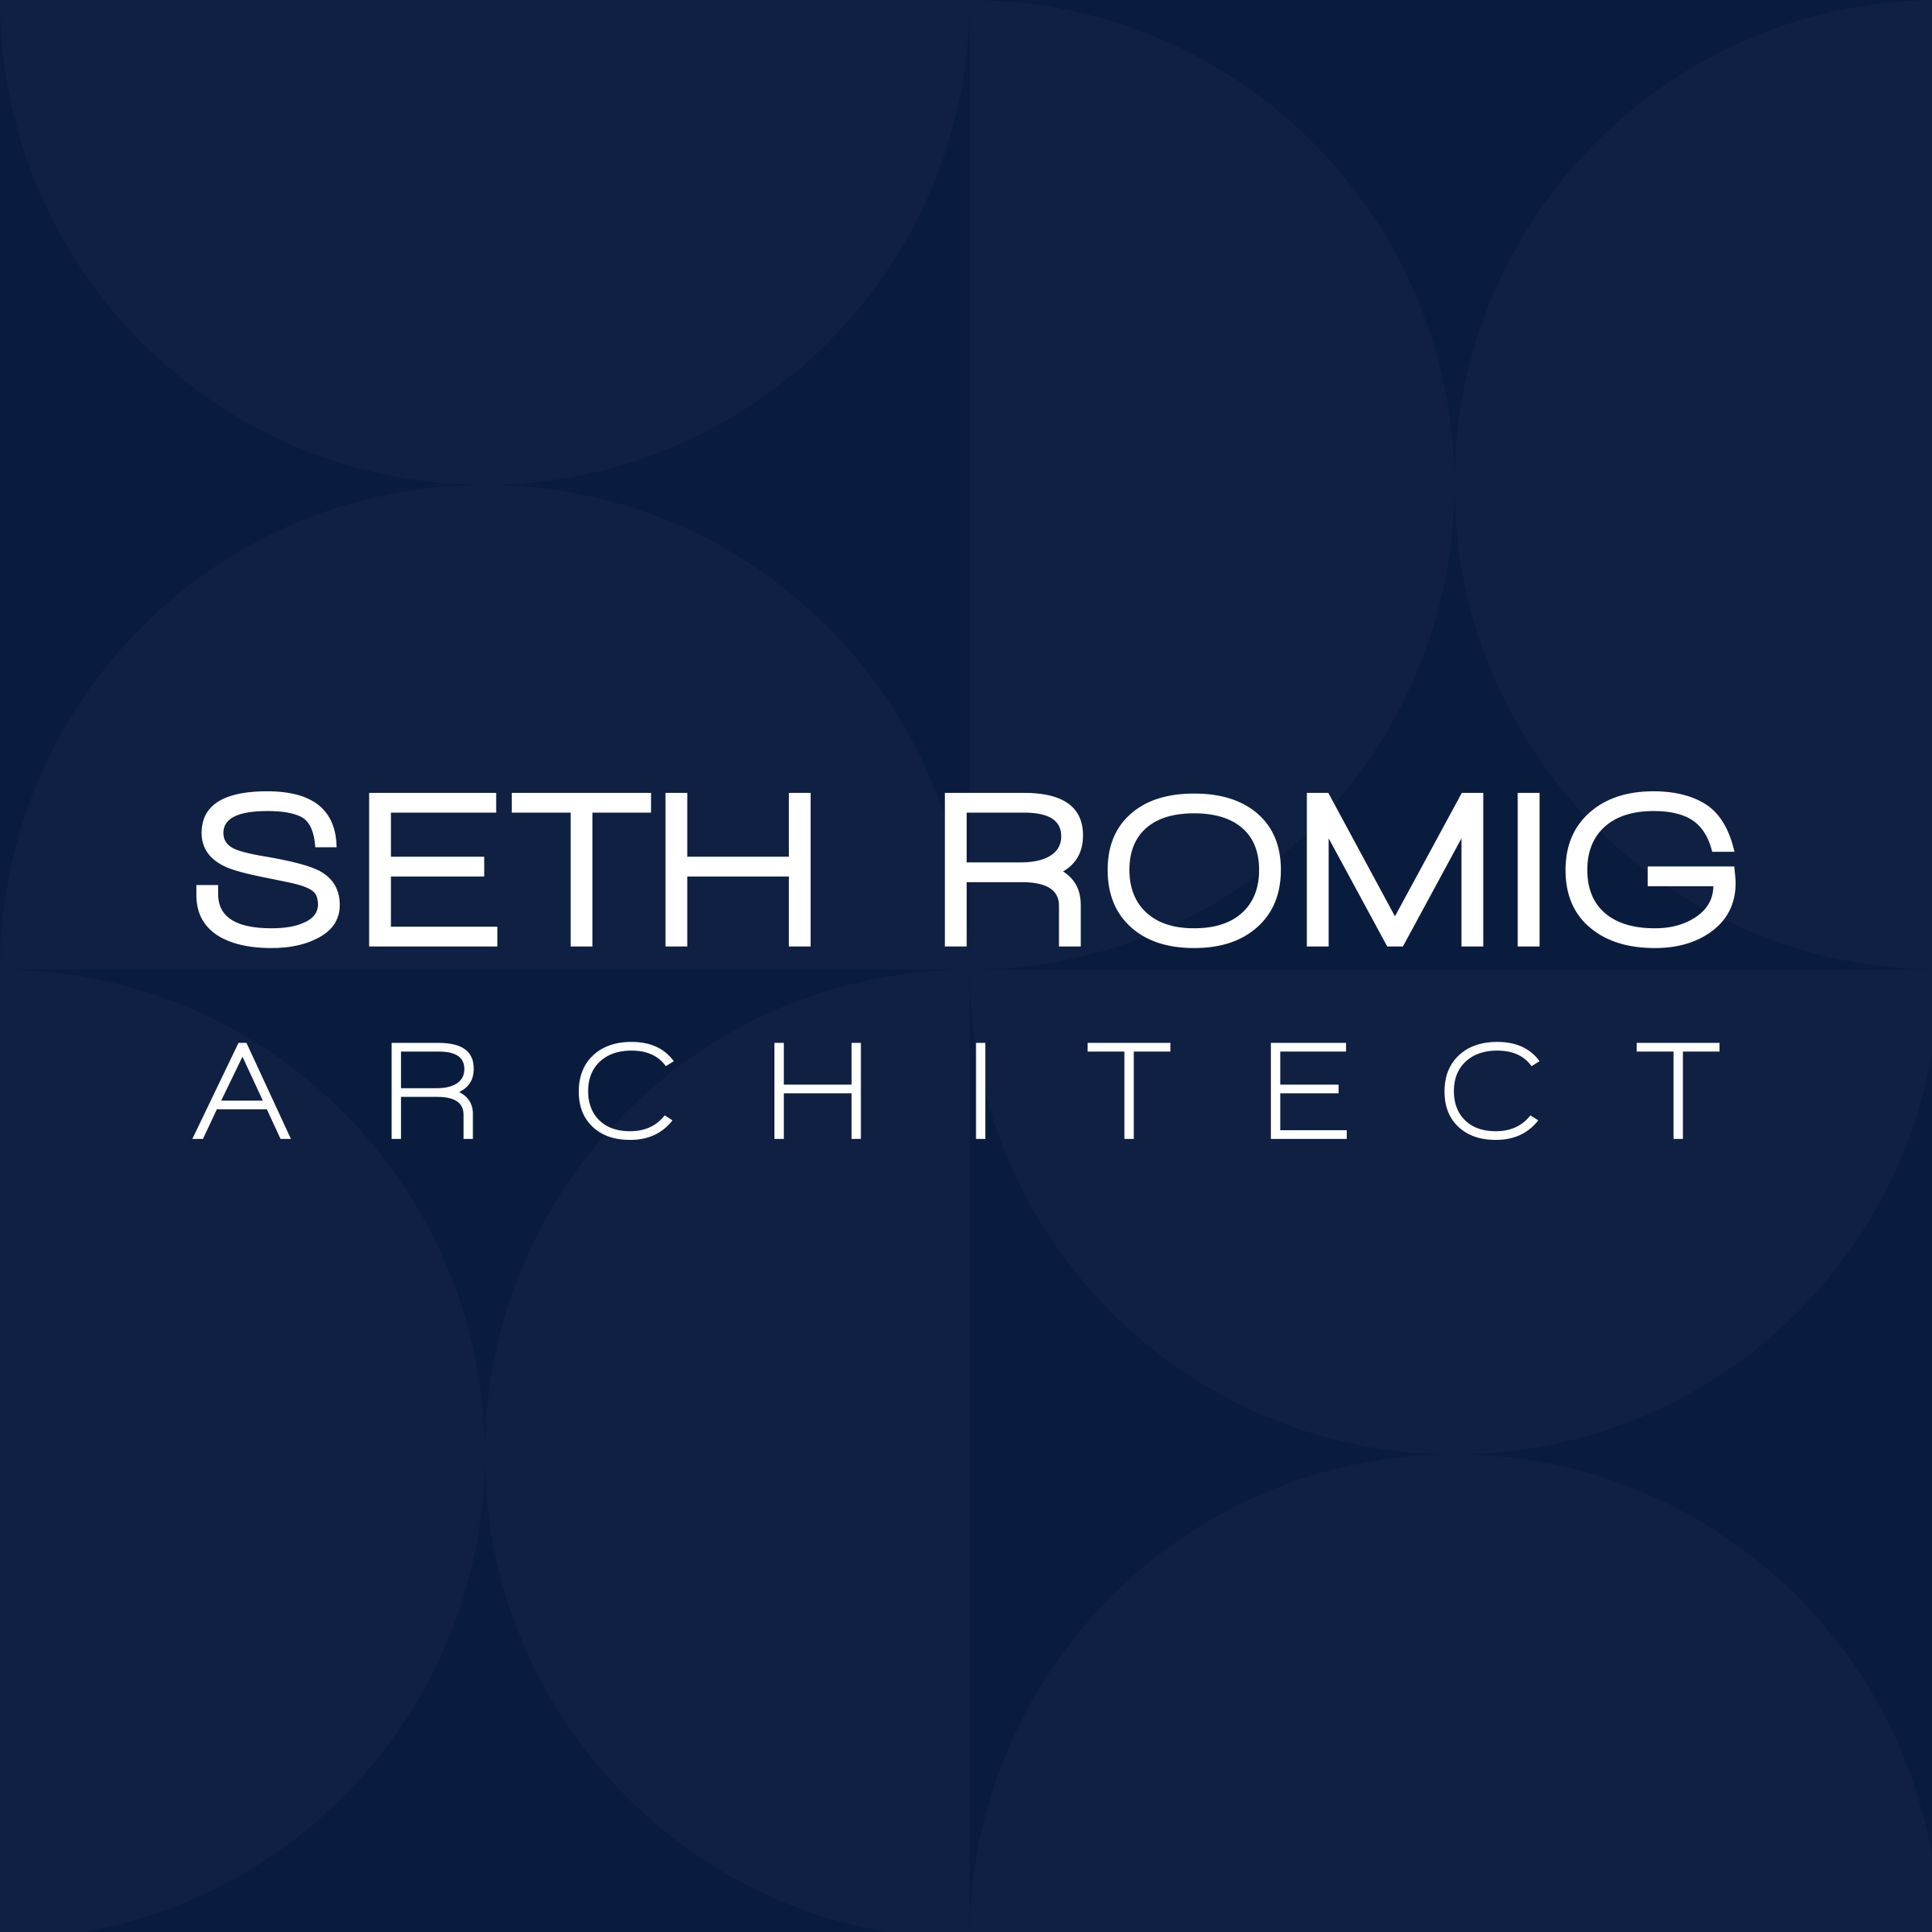 Seth Romig Website